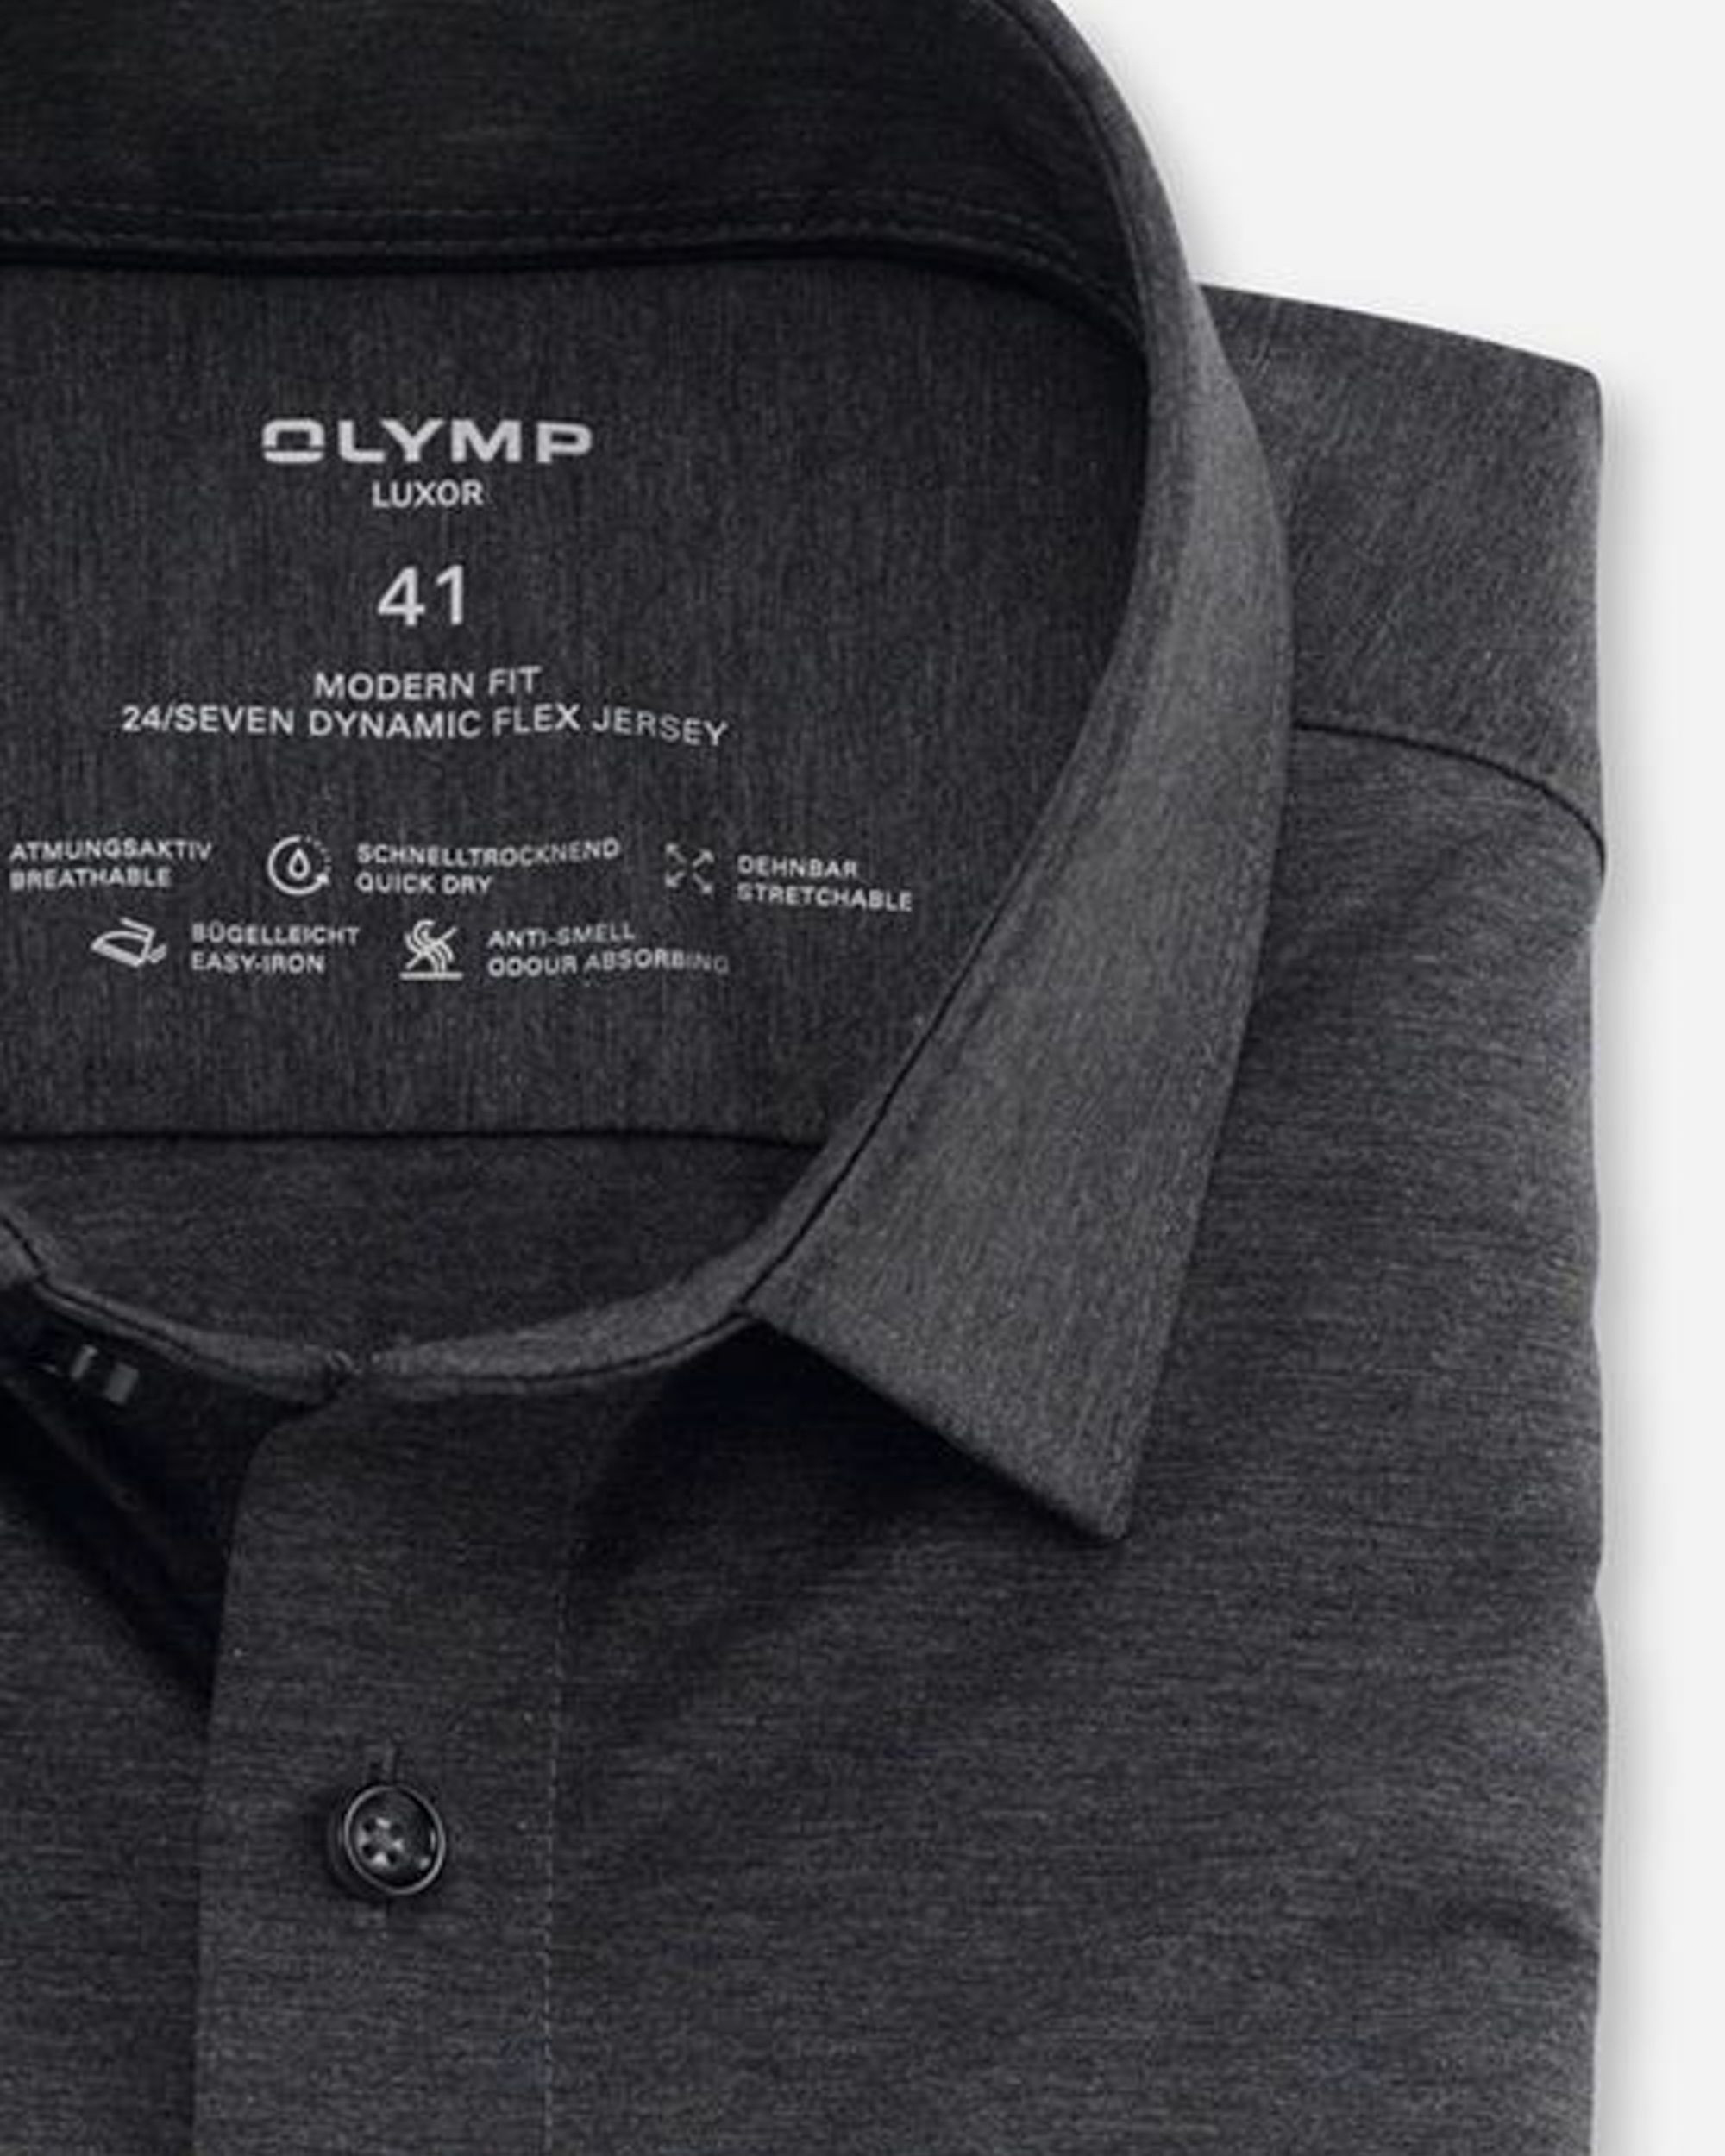 OLYMP Luxor 24/7 Modern fit Overhemd LM Antraciet 060412-001-37